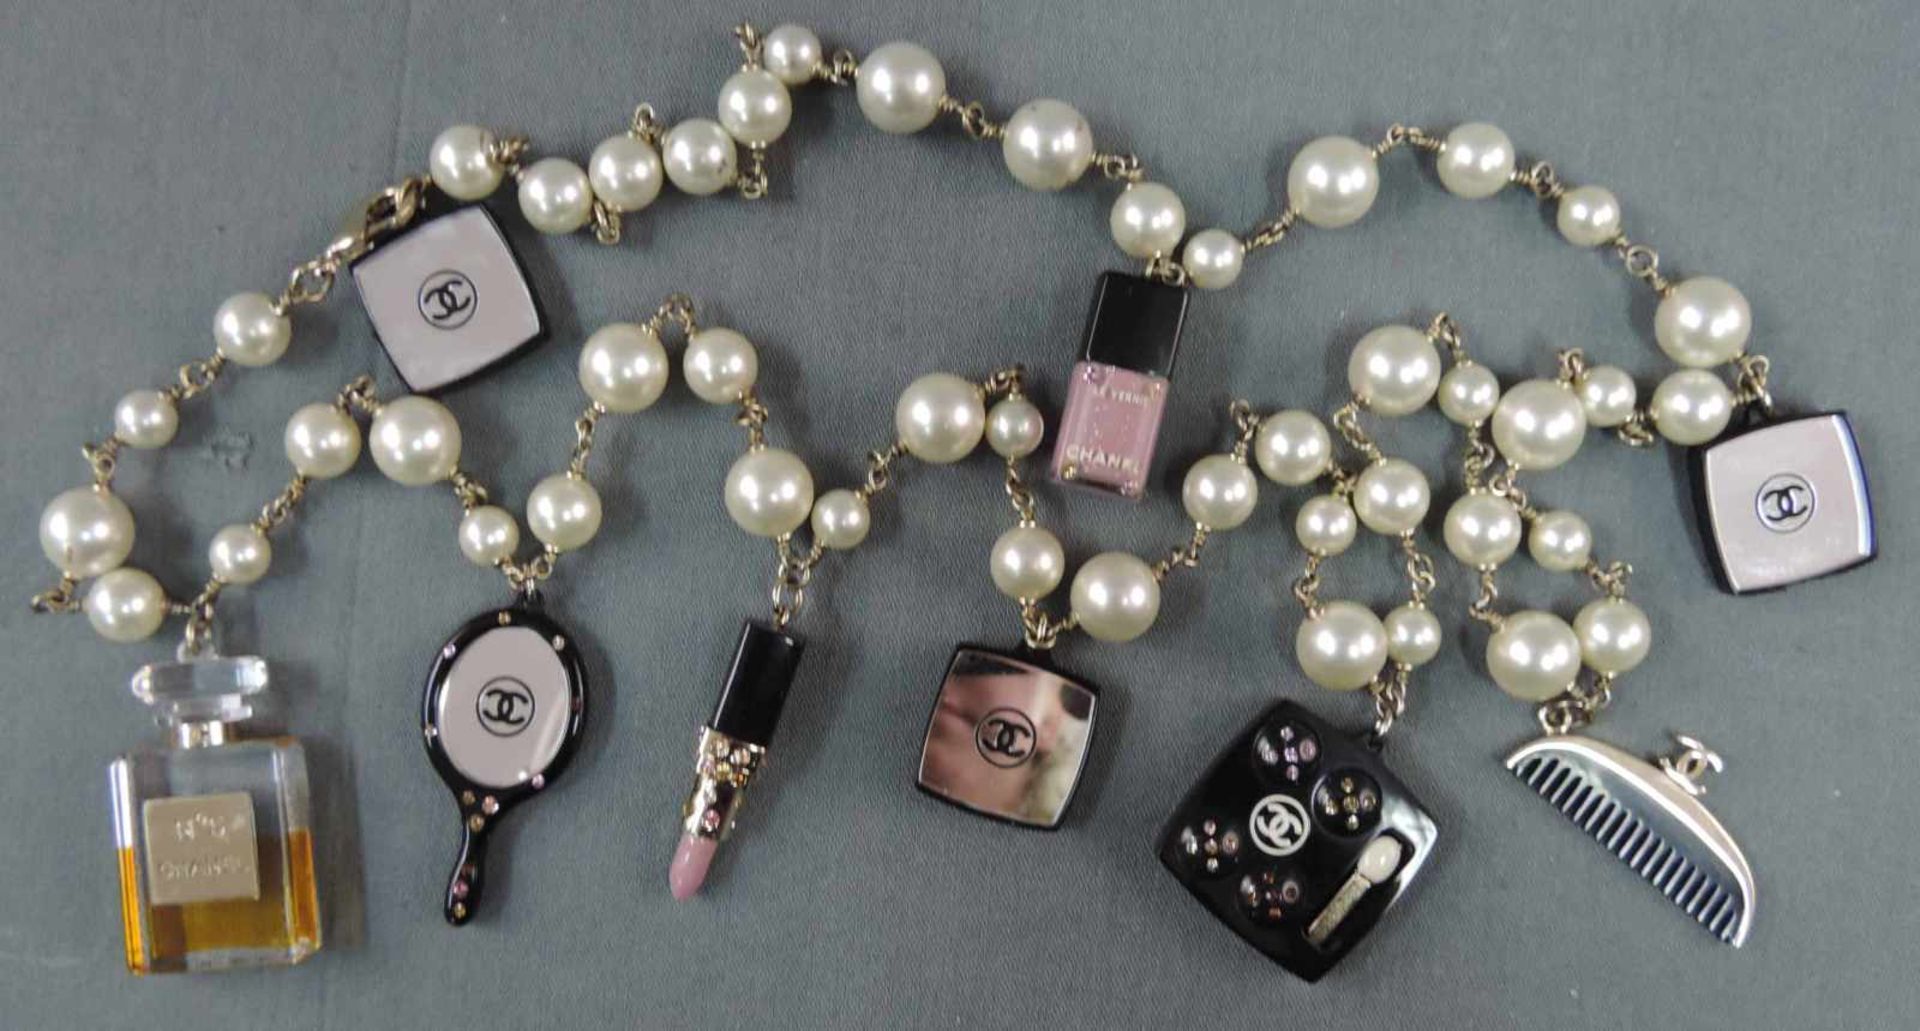 Chanel Kette Modeschmuck. Offen circa 100 cm lang. Chanel necklace, fashion jewelry. Open about - Bild 2 aus 2